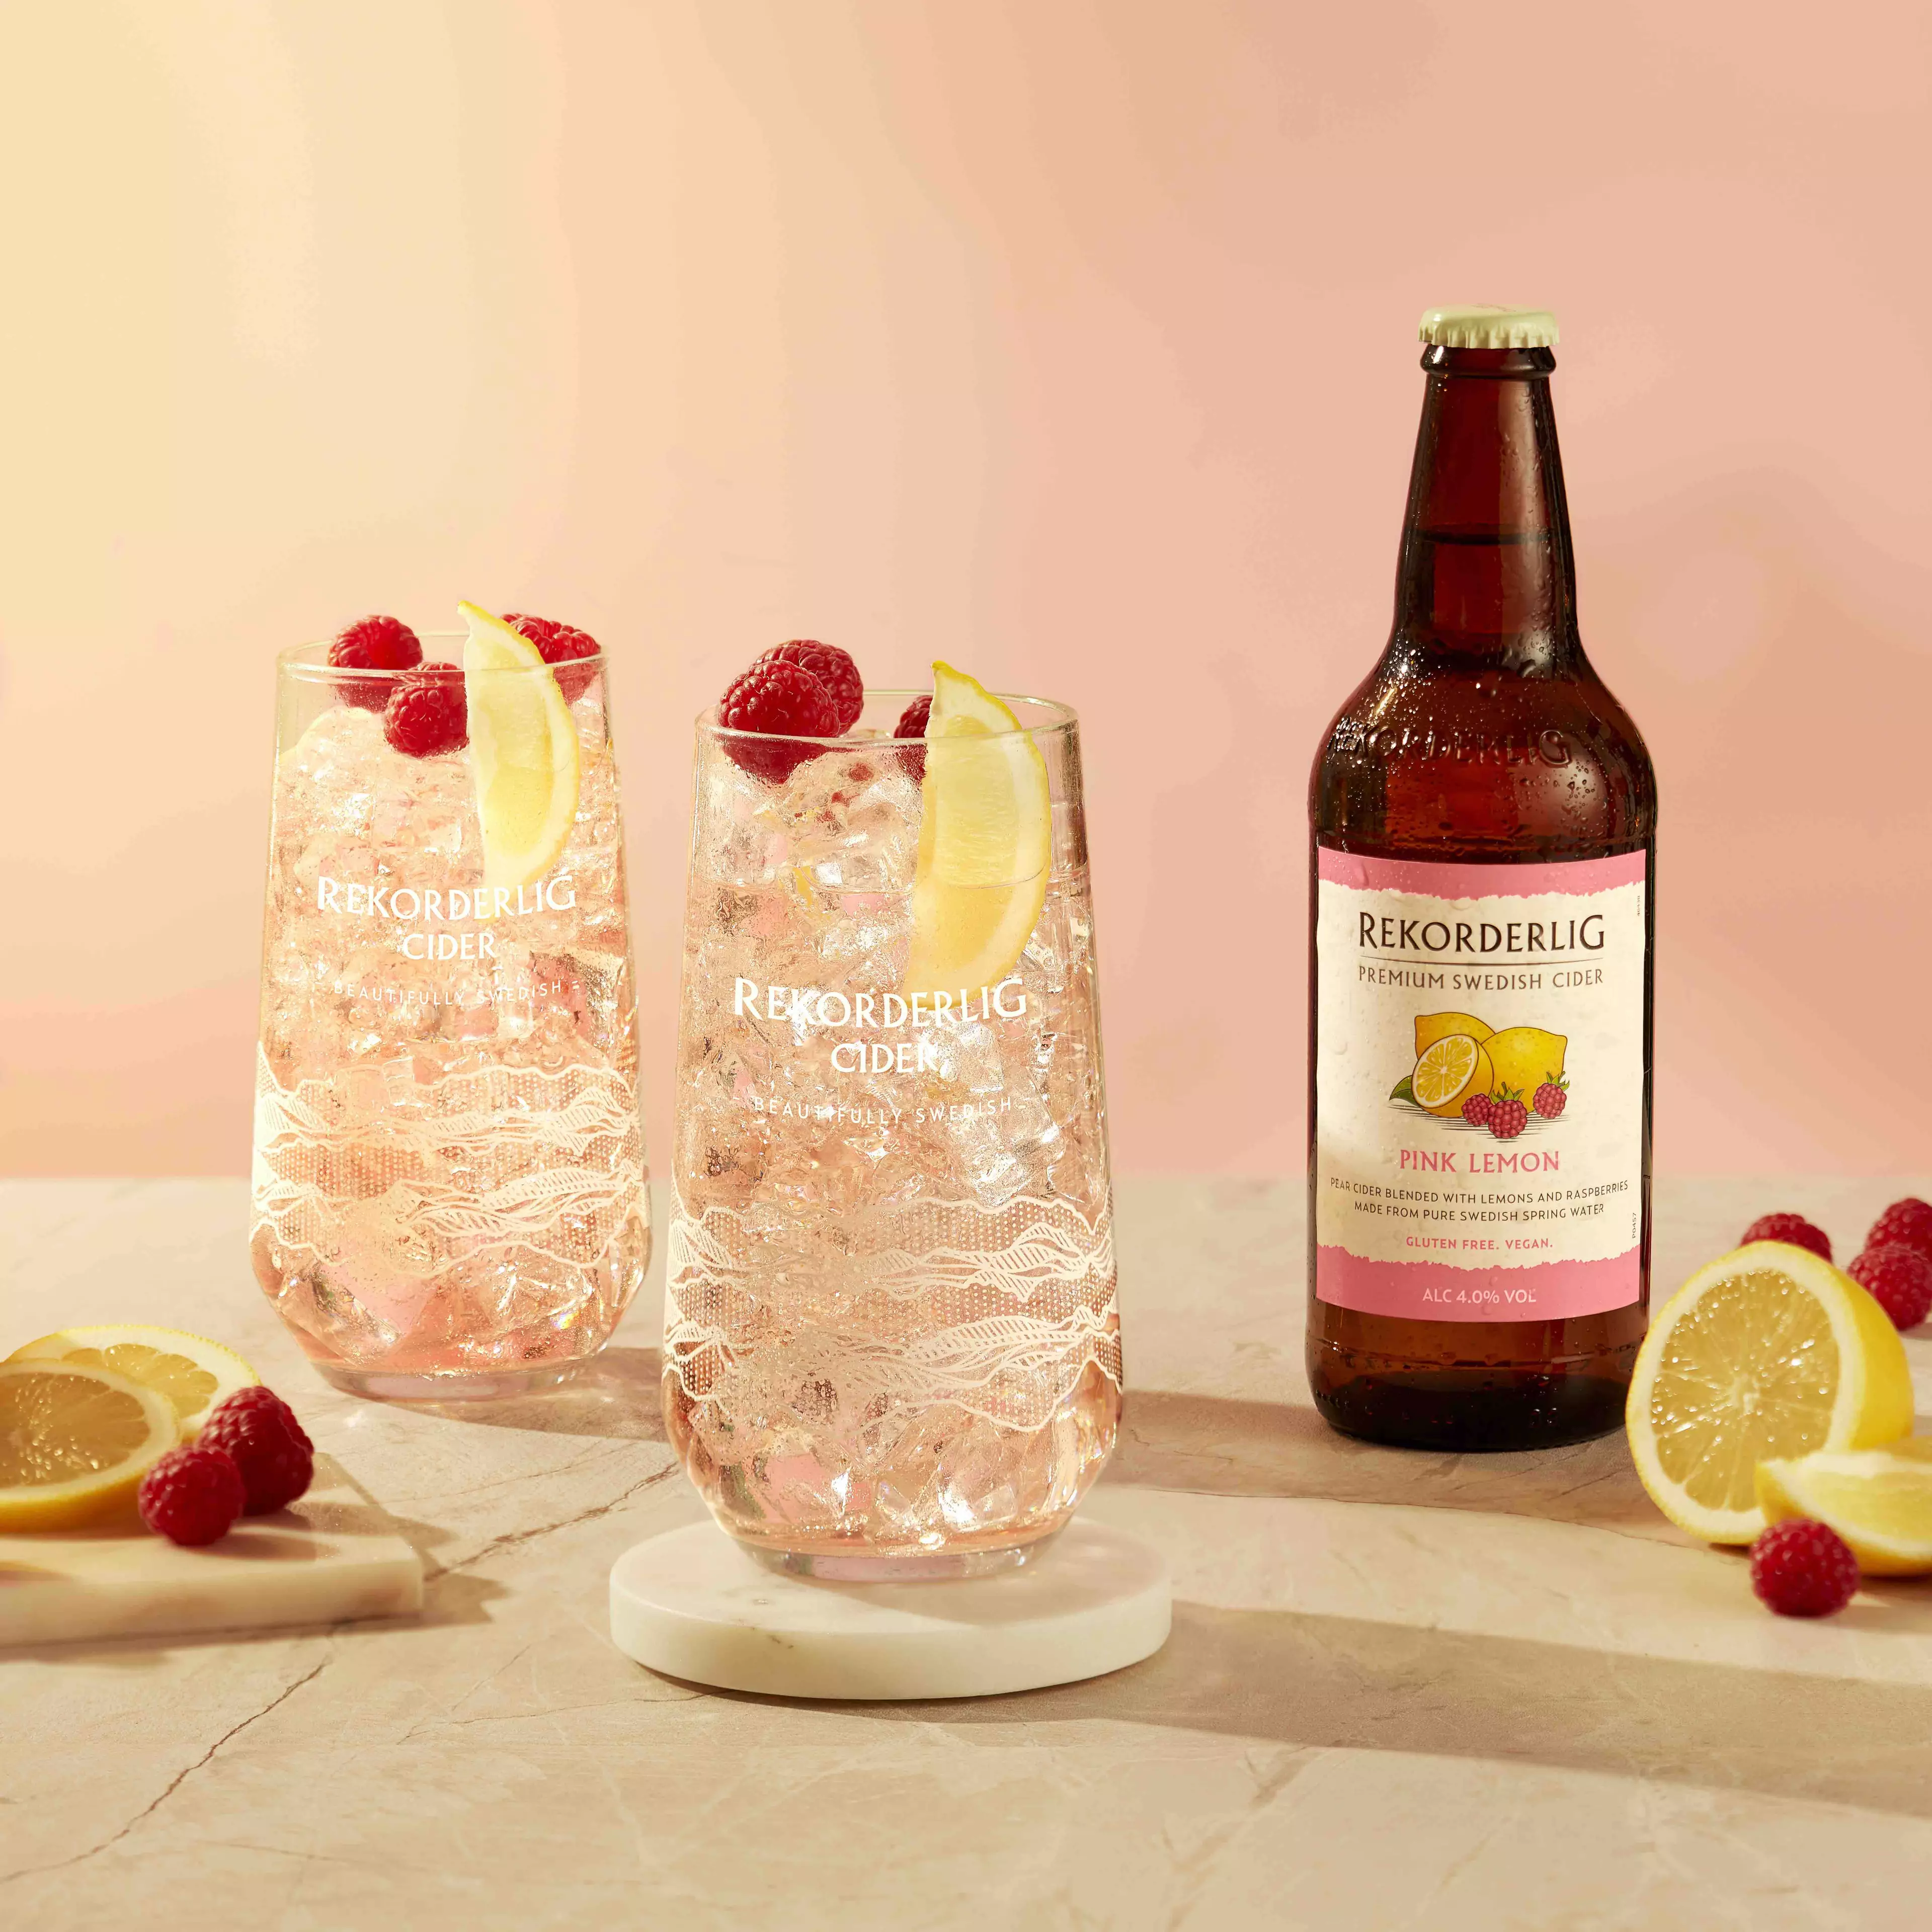 Rekorderlig's newest flavour is pink lemon (